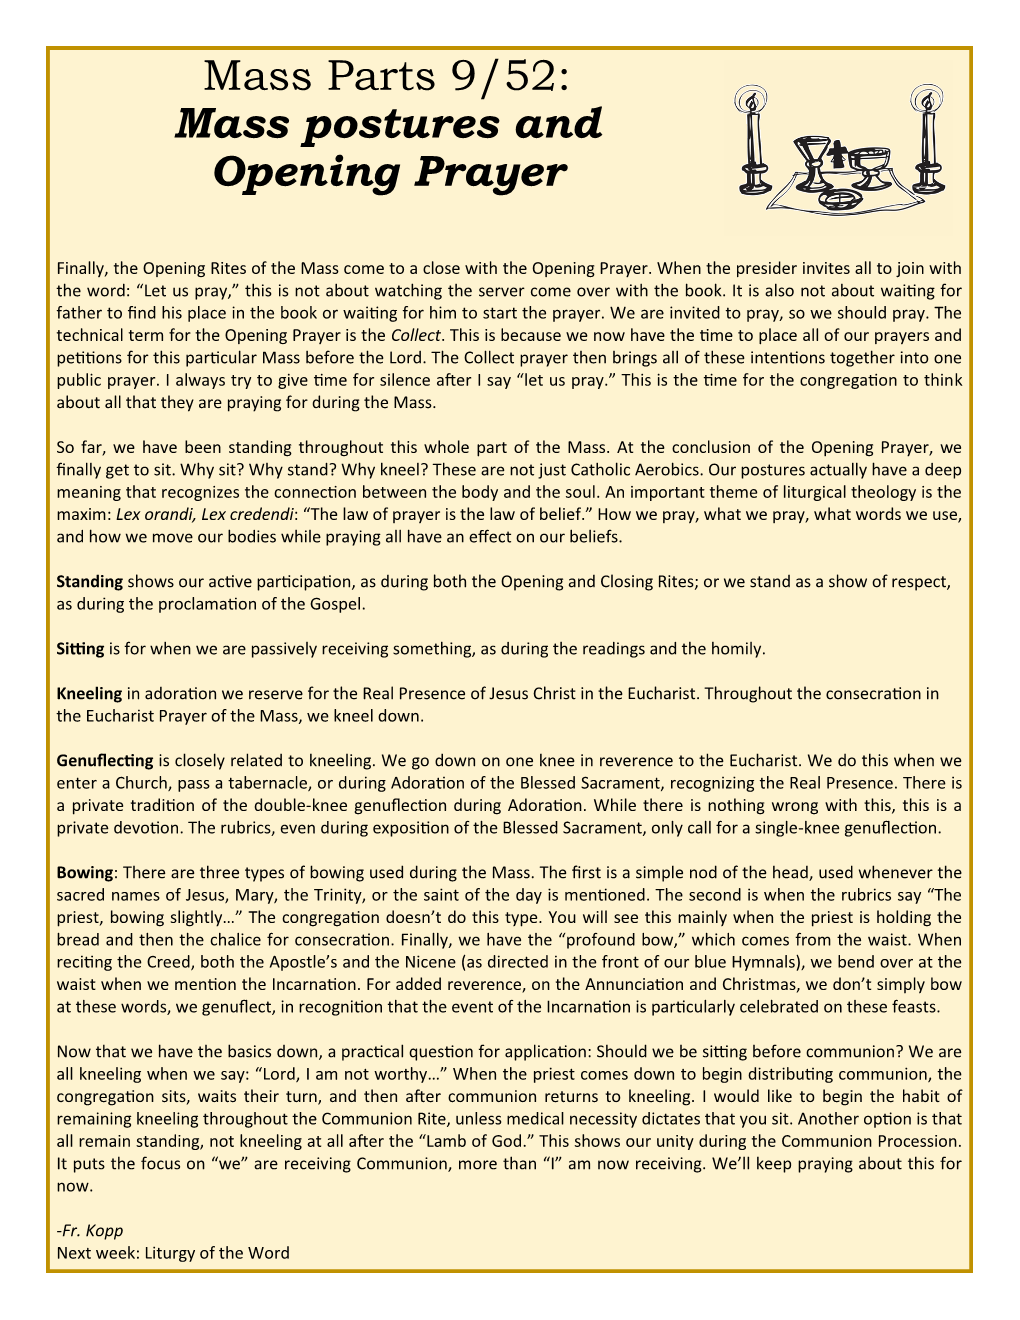 Mass Postures and Opening Prayer